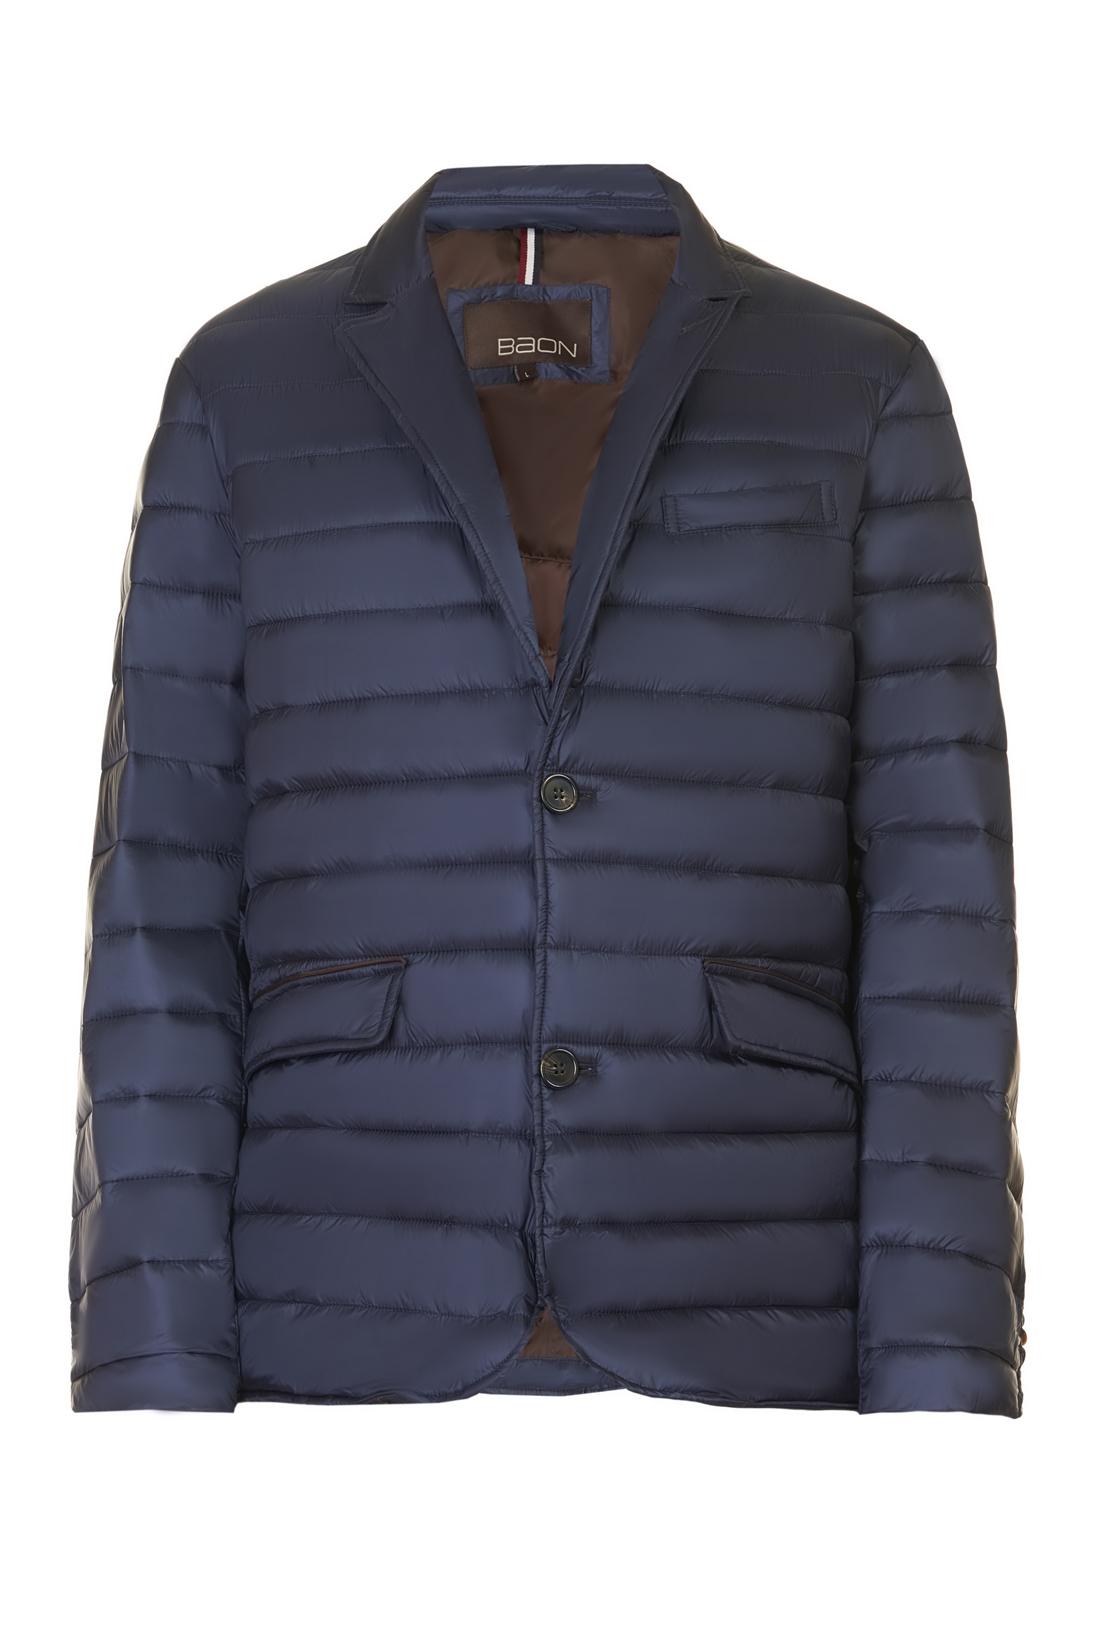 Куртка-пиджак (арт. baon B537561), размер XL, цвет синий Куртка-пиджак (арт. baon B537561) - фото 3